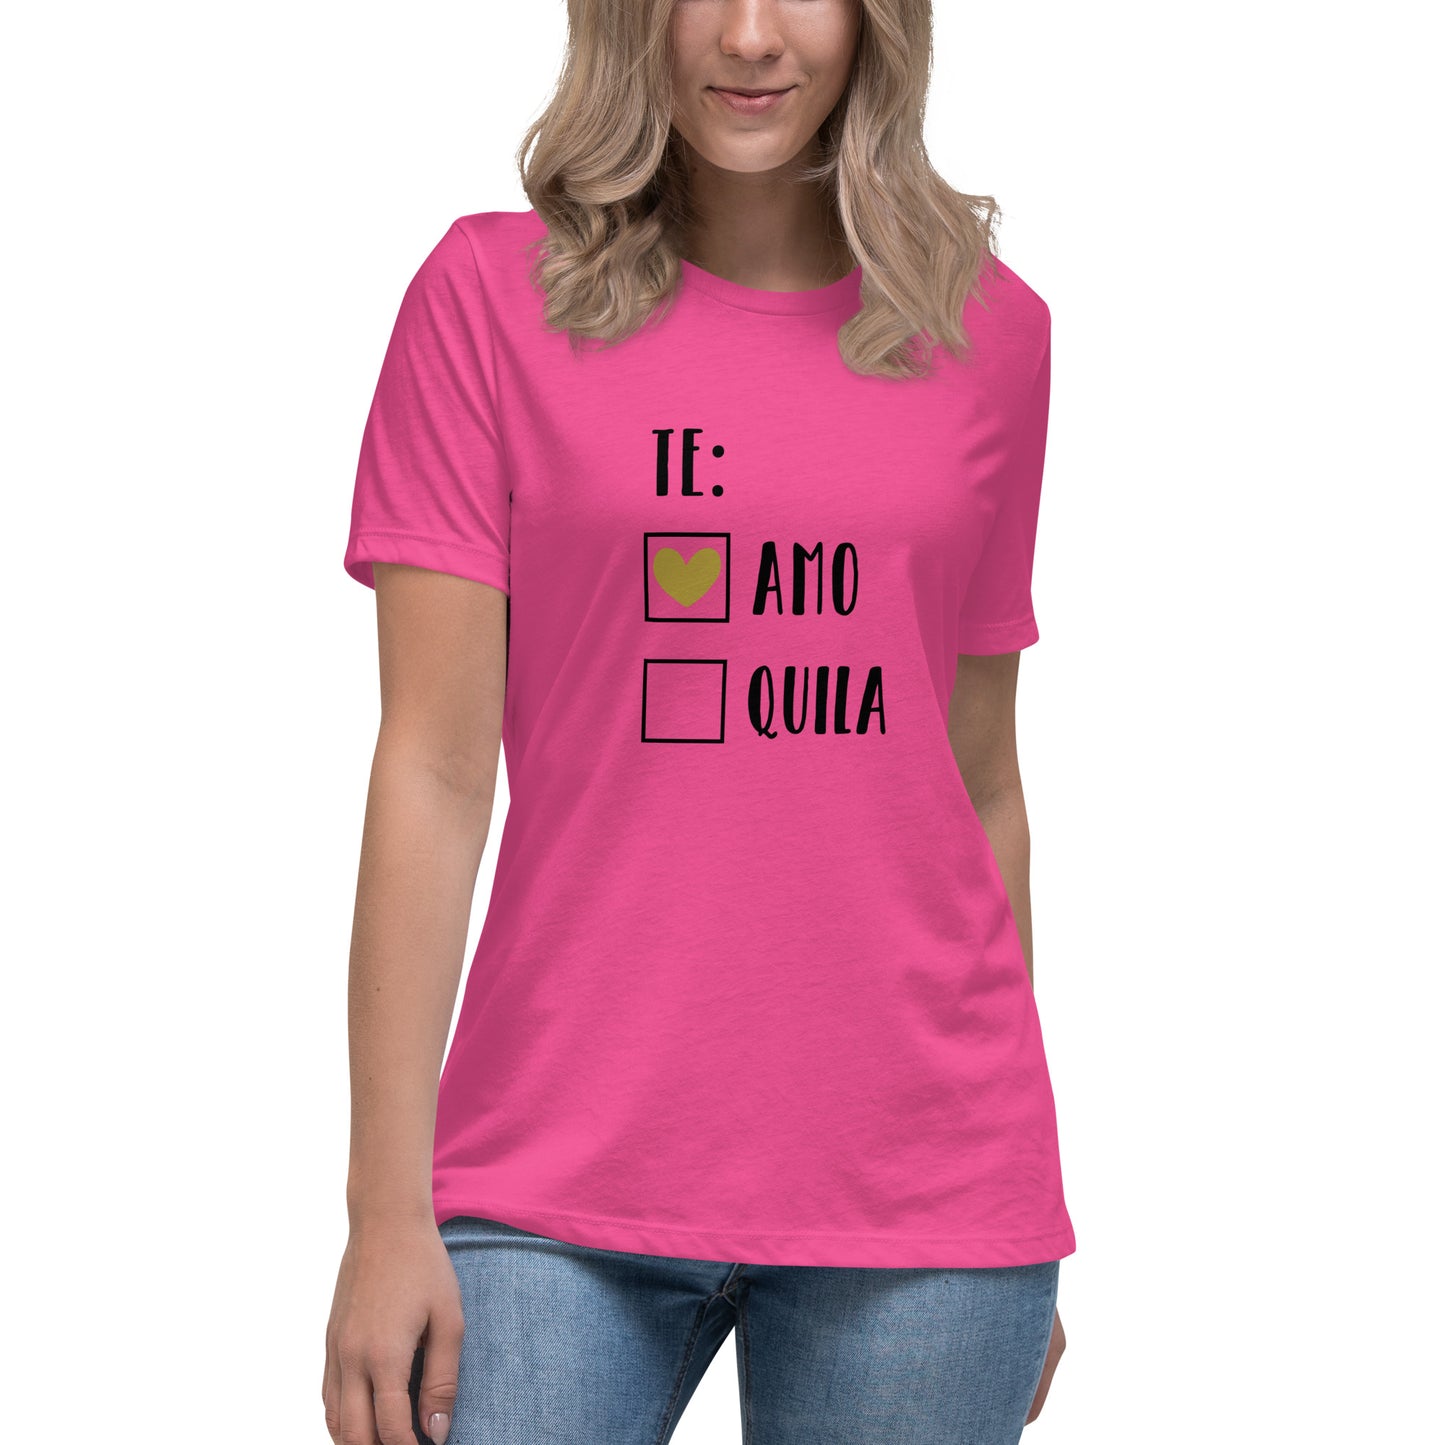 Te Amo Tee Women's Relaxed T-Shirt - Light Colors CedarHill Country Market